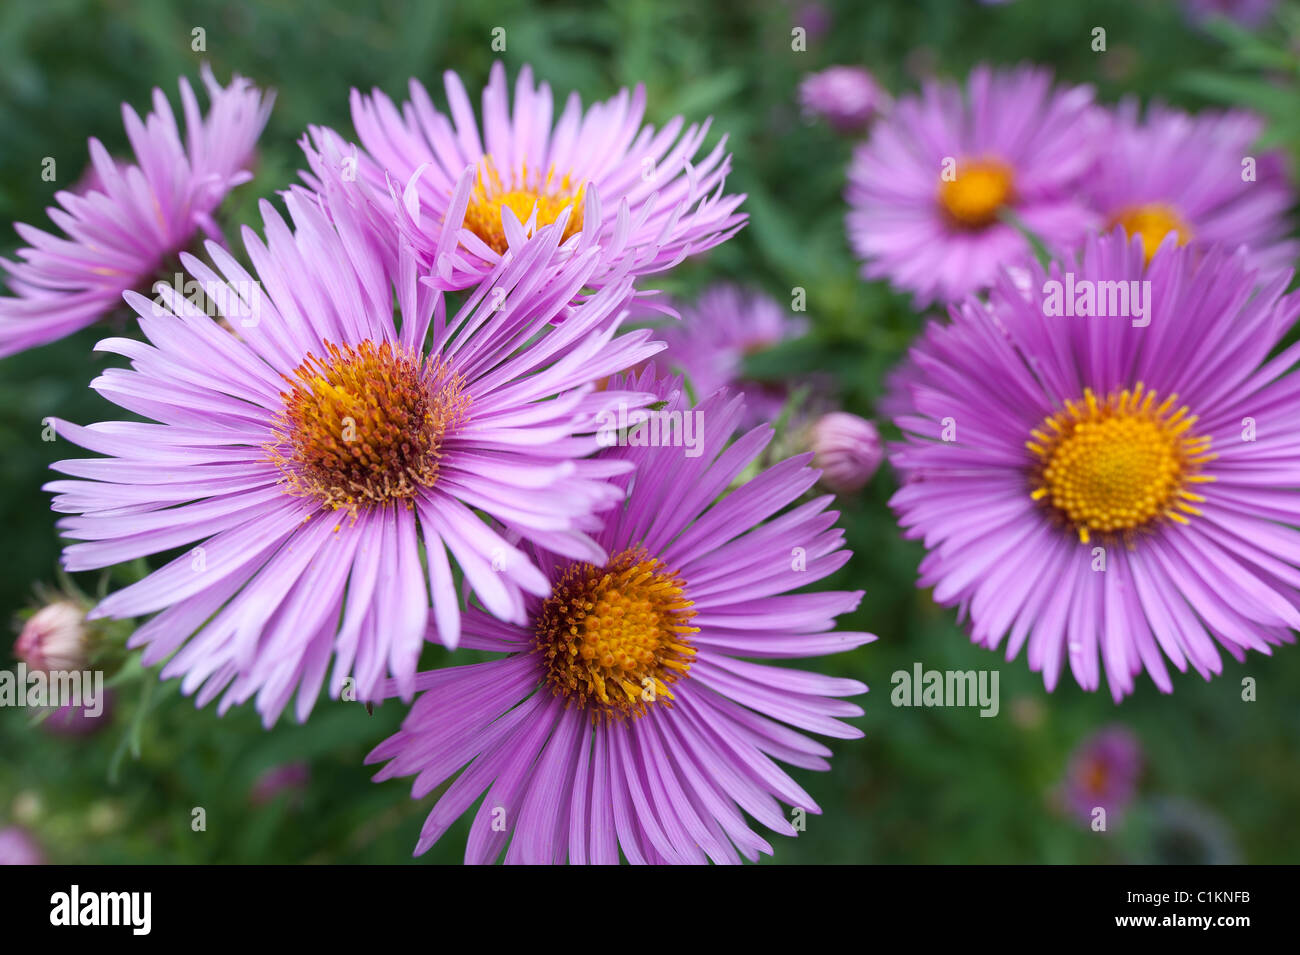 Mauve Asters X Frikartii 'Monch' Frikart's aster purple daisy Stock Photo